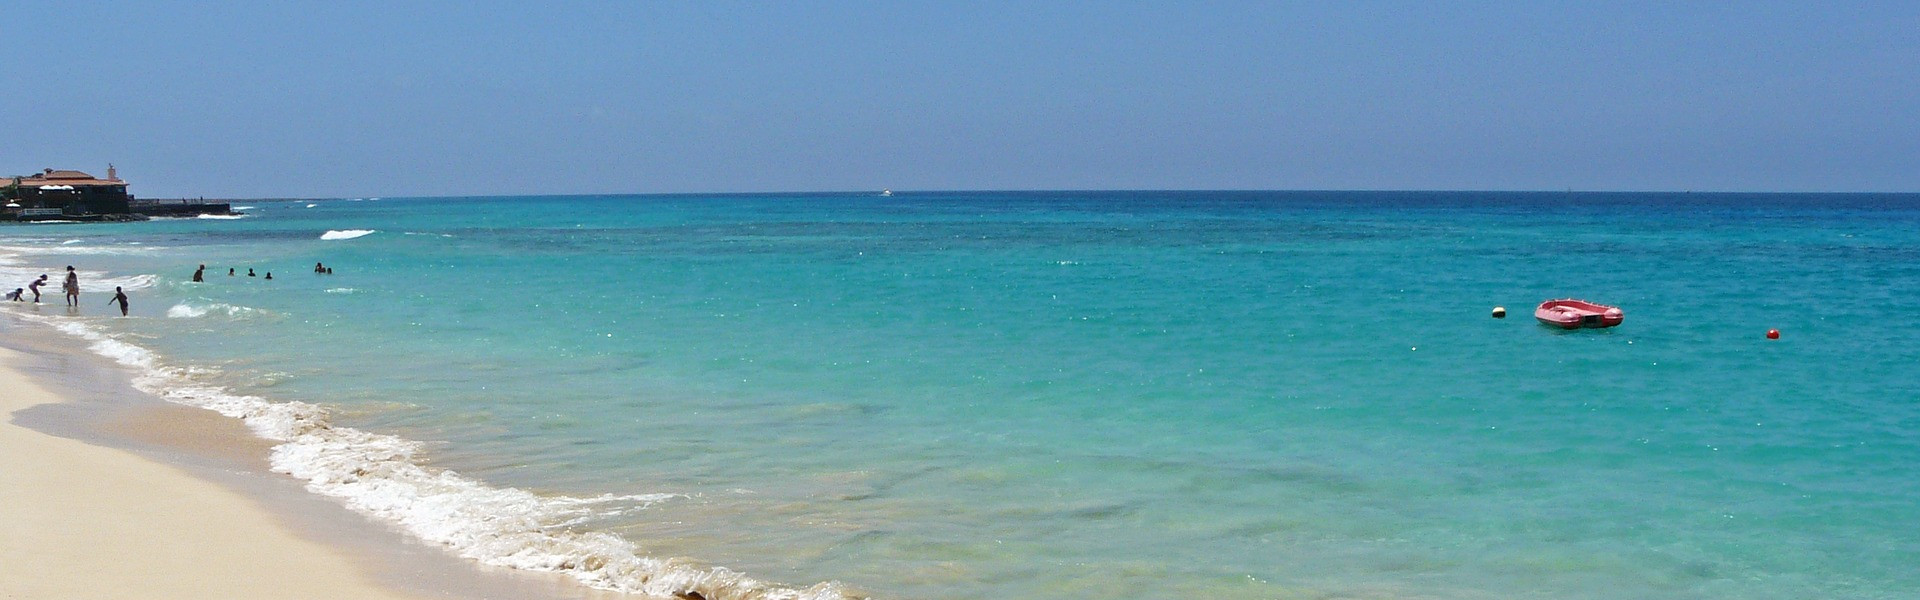 Destination image of Cap Vert